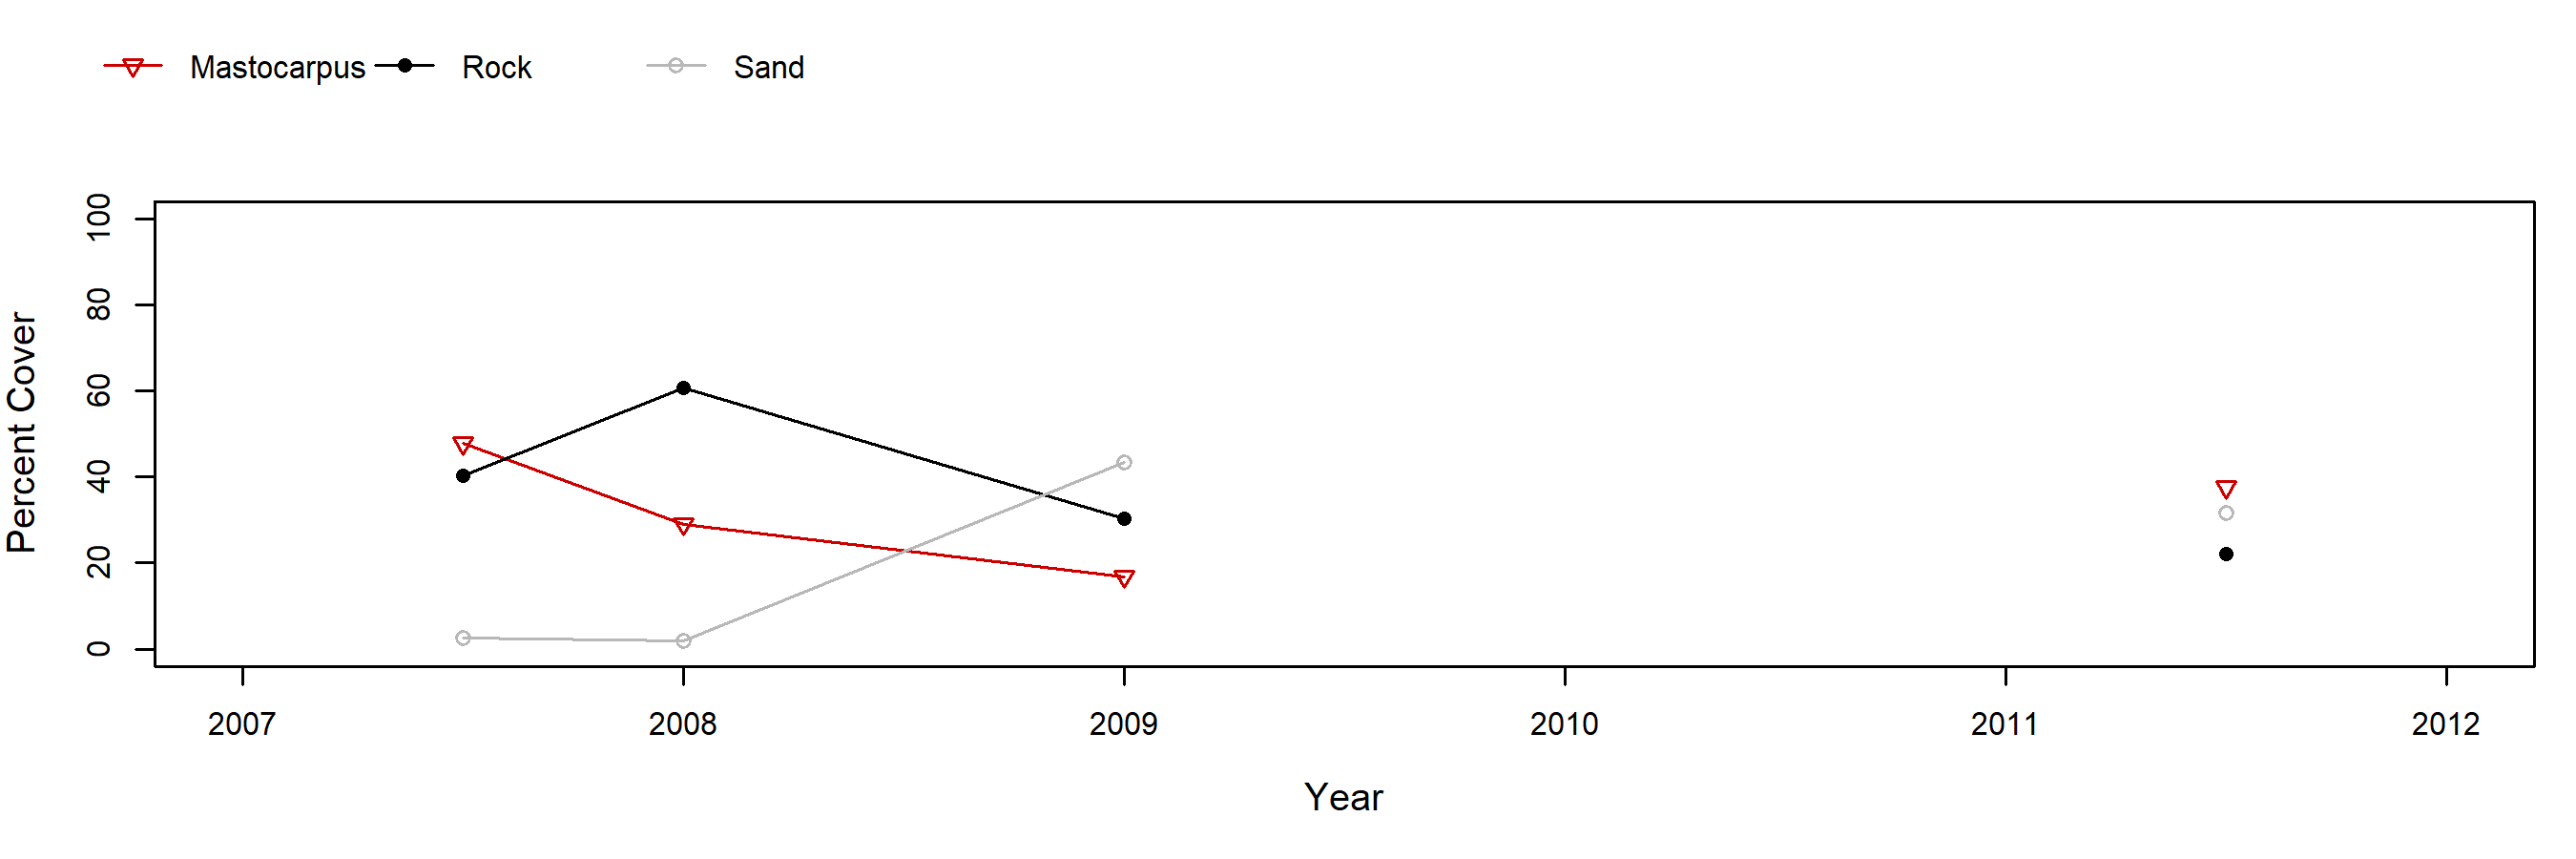 Davenport Landing Mastocarpus trend plot